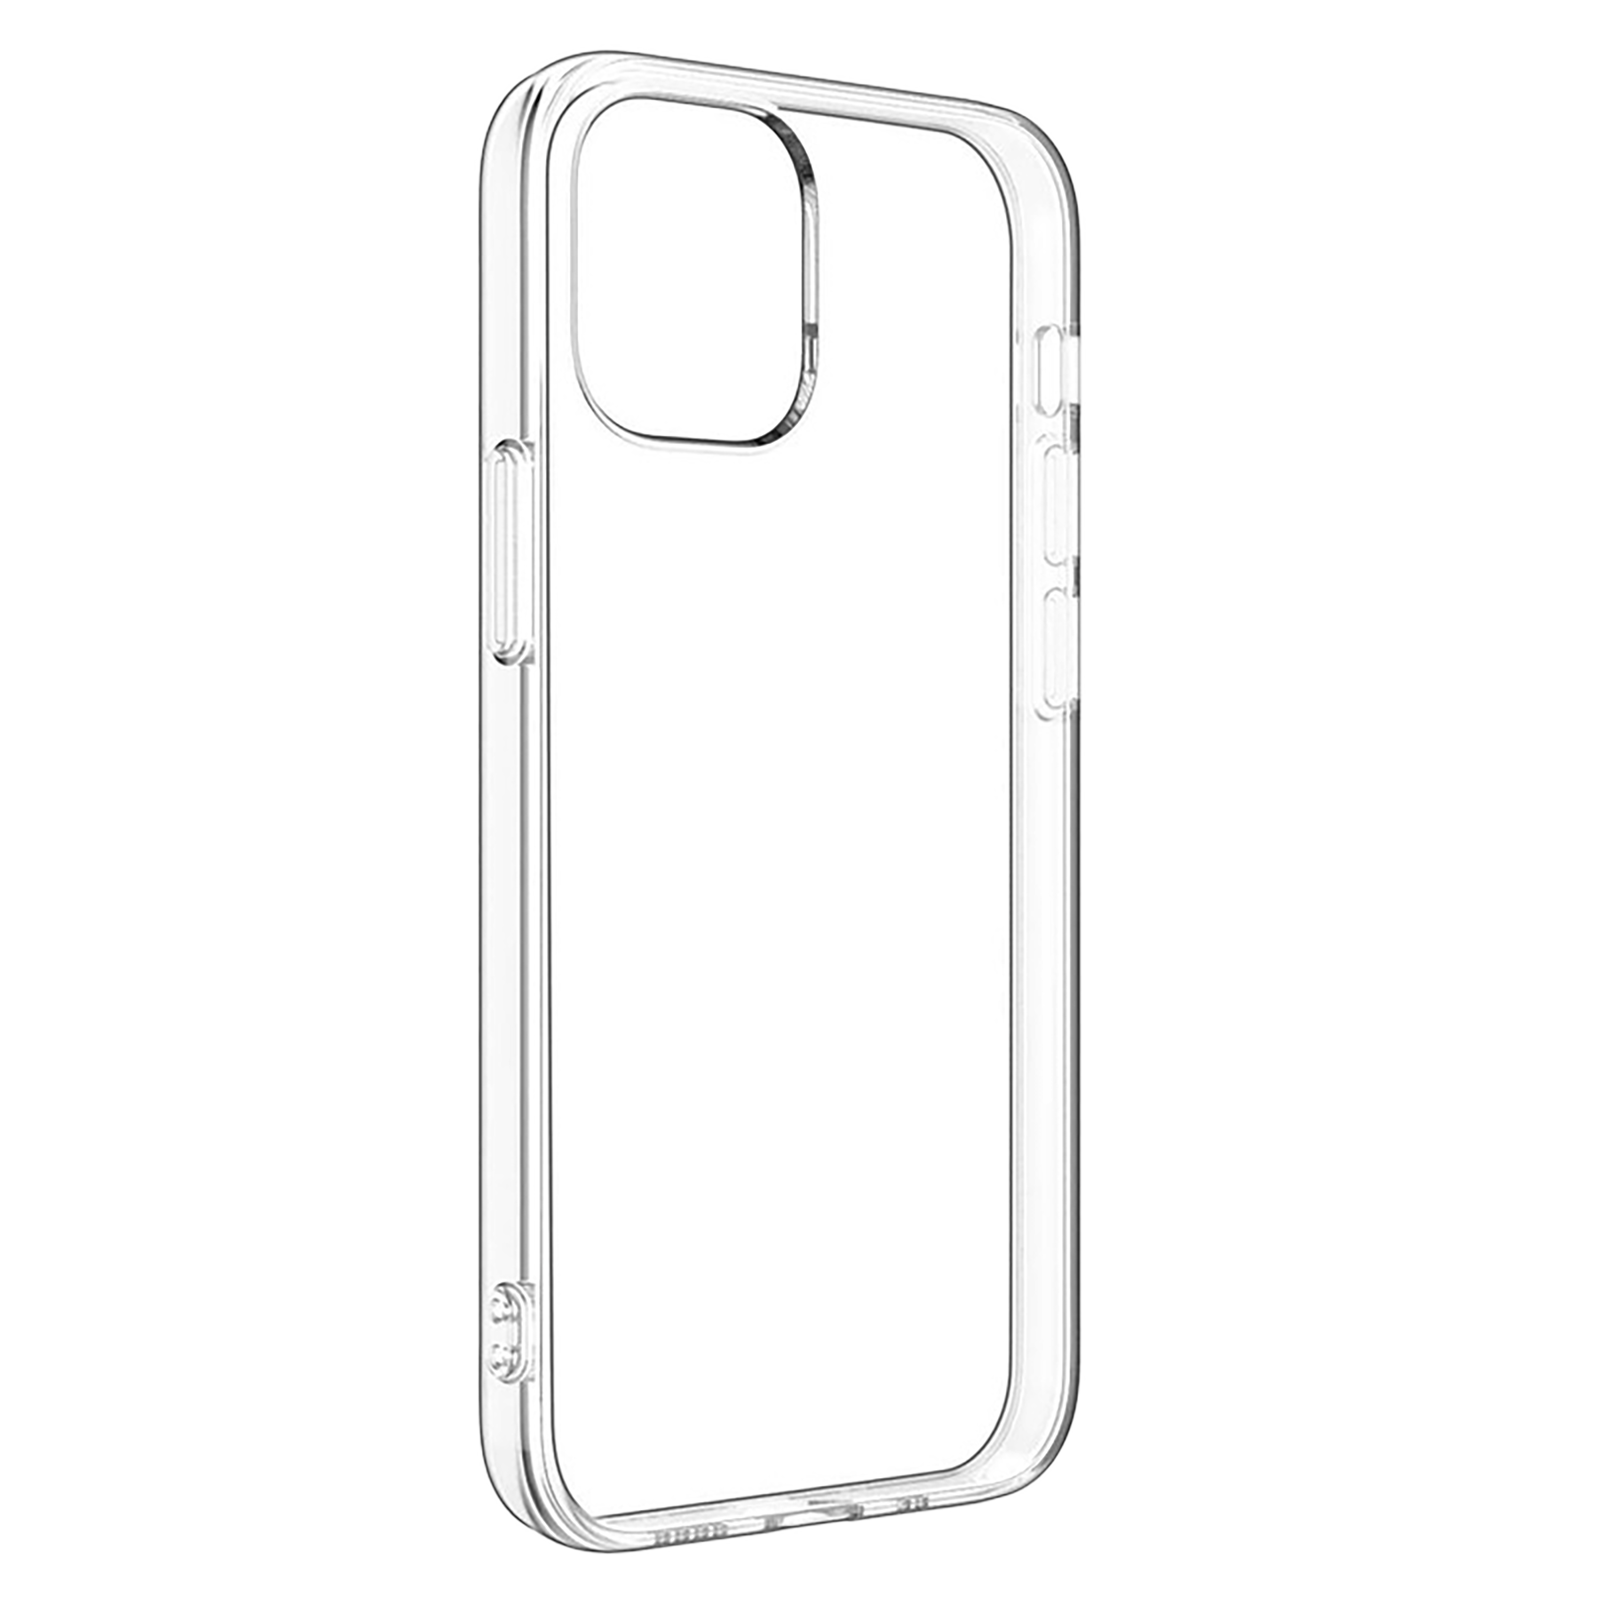 Vaku Luxos Glassy Polycarbonate Hard Back Case For iPhone 13 Pro (Scratch Resistant, VAKU-IPH13PR-GLSYCLR, Clear)